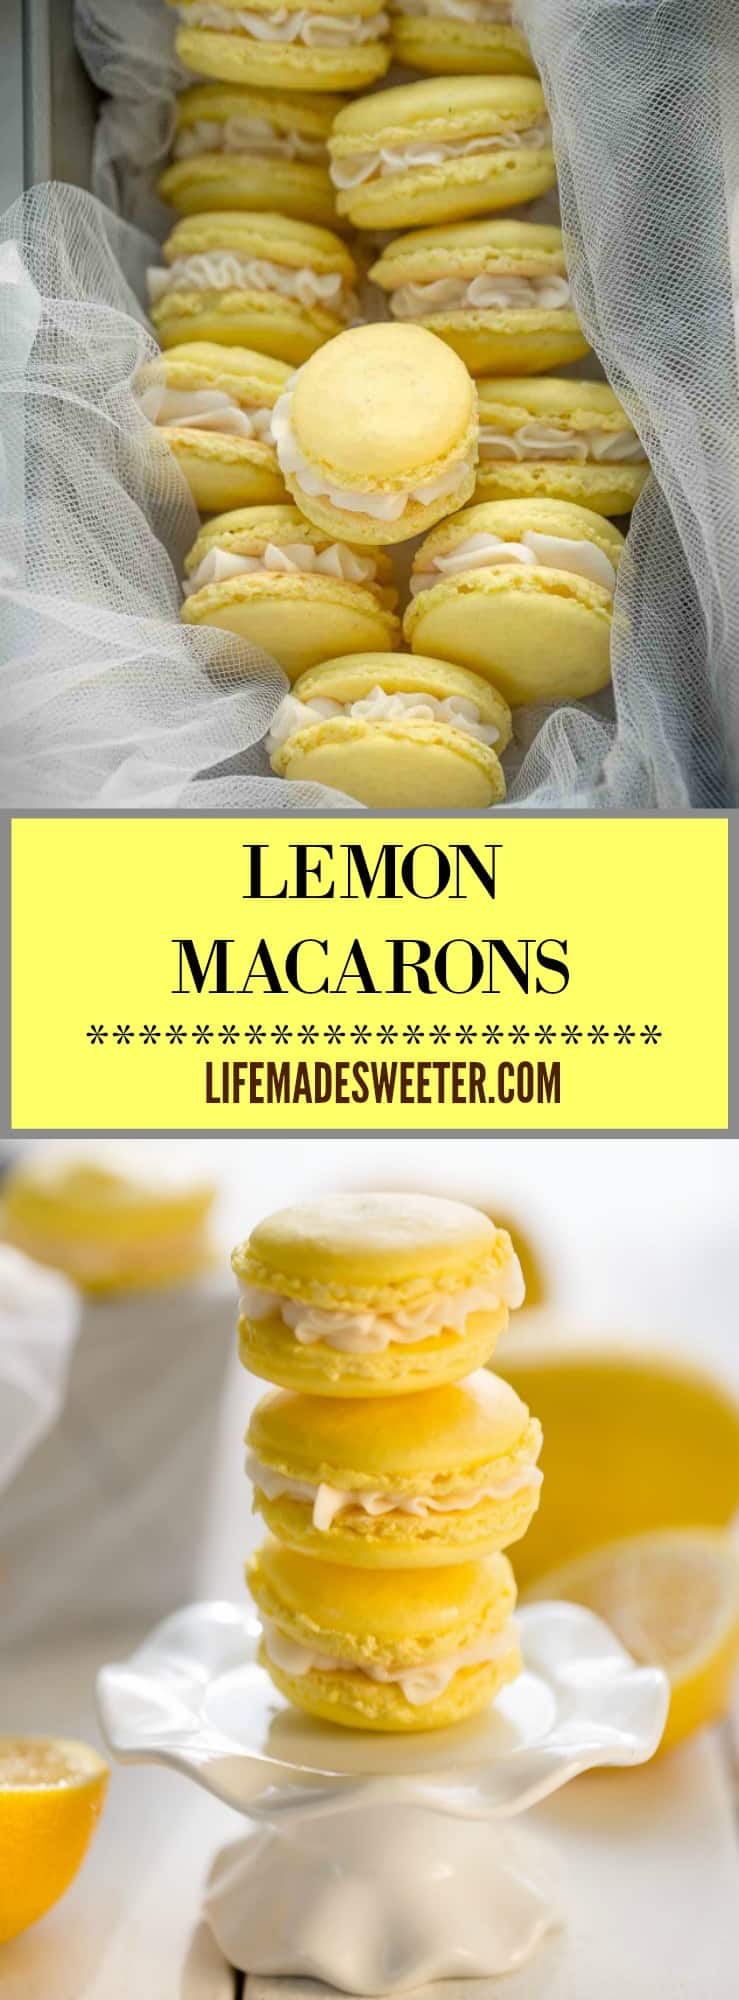 Lemon Macarons make the perfect sweet treat